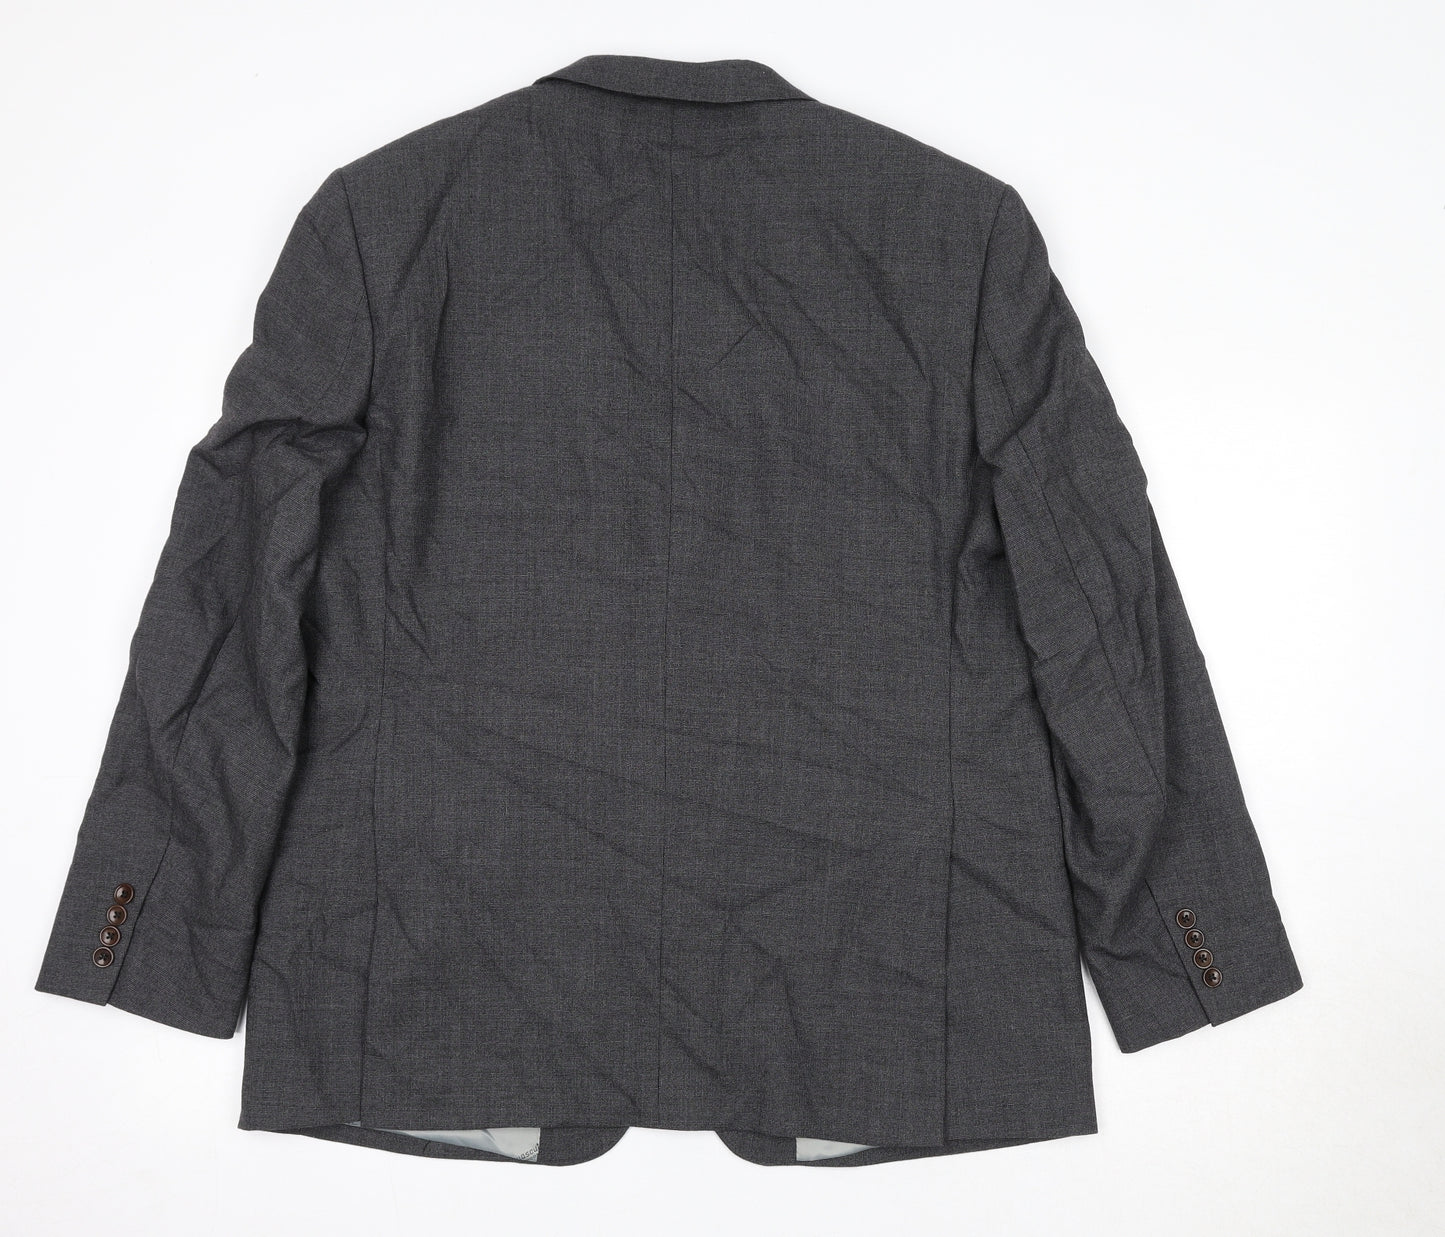 Aquascutum Mens Grey Wool Jacket Suit Jacket Size 46 Regular